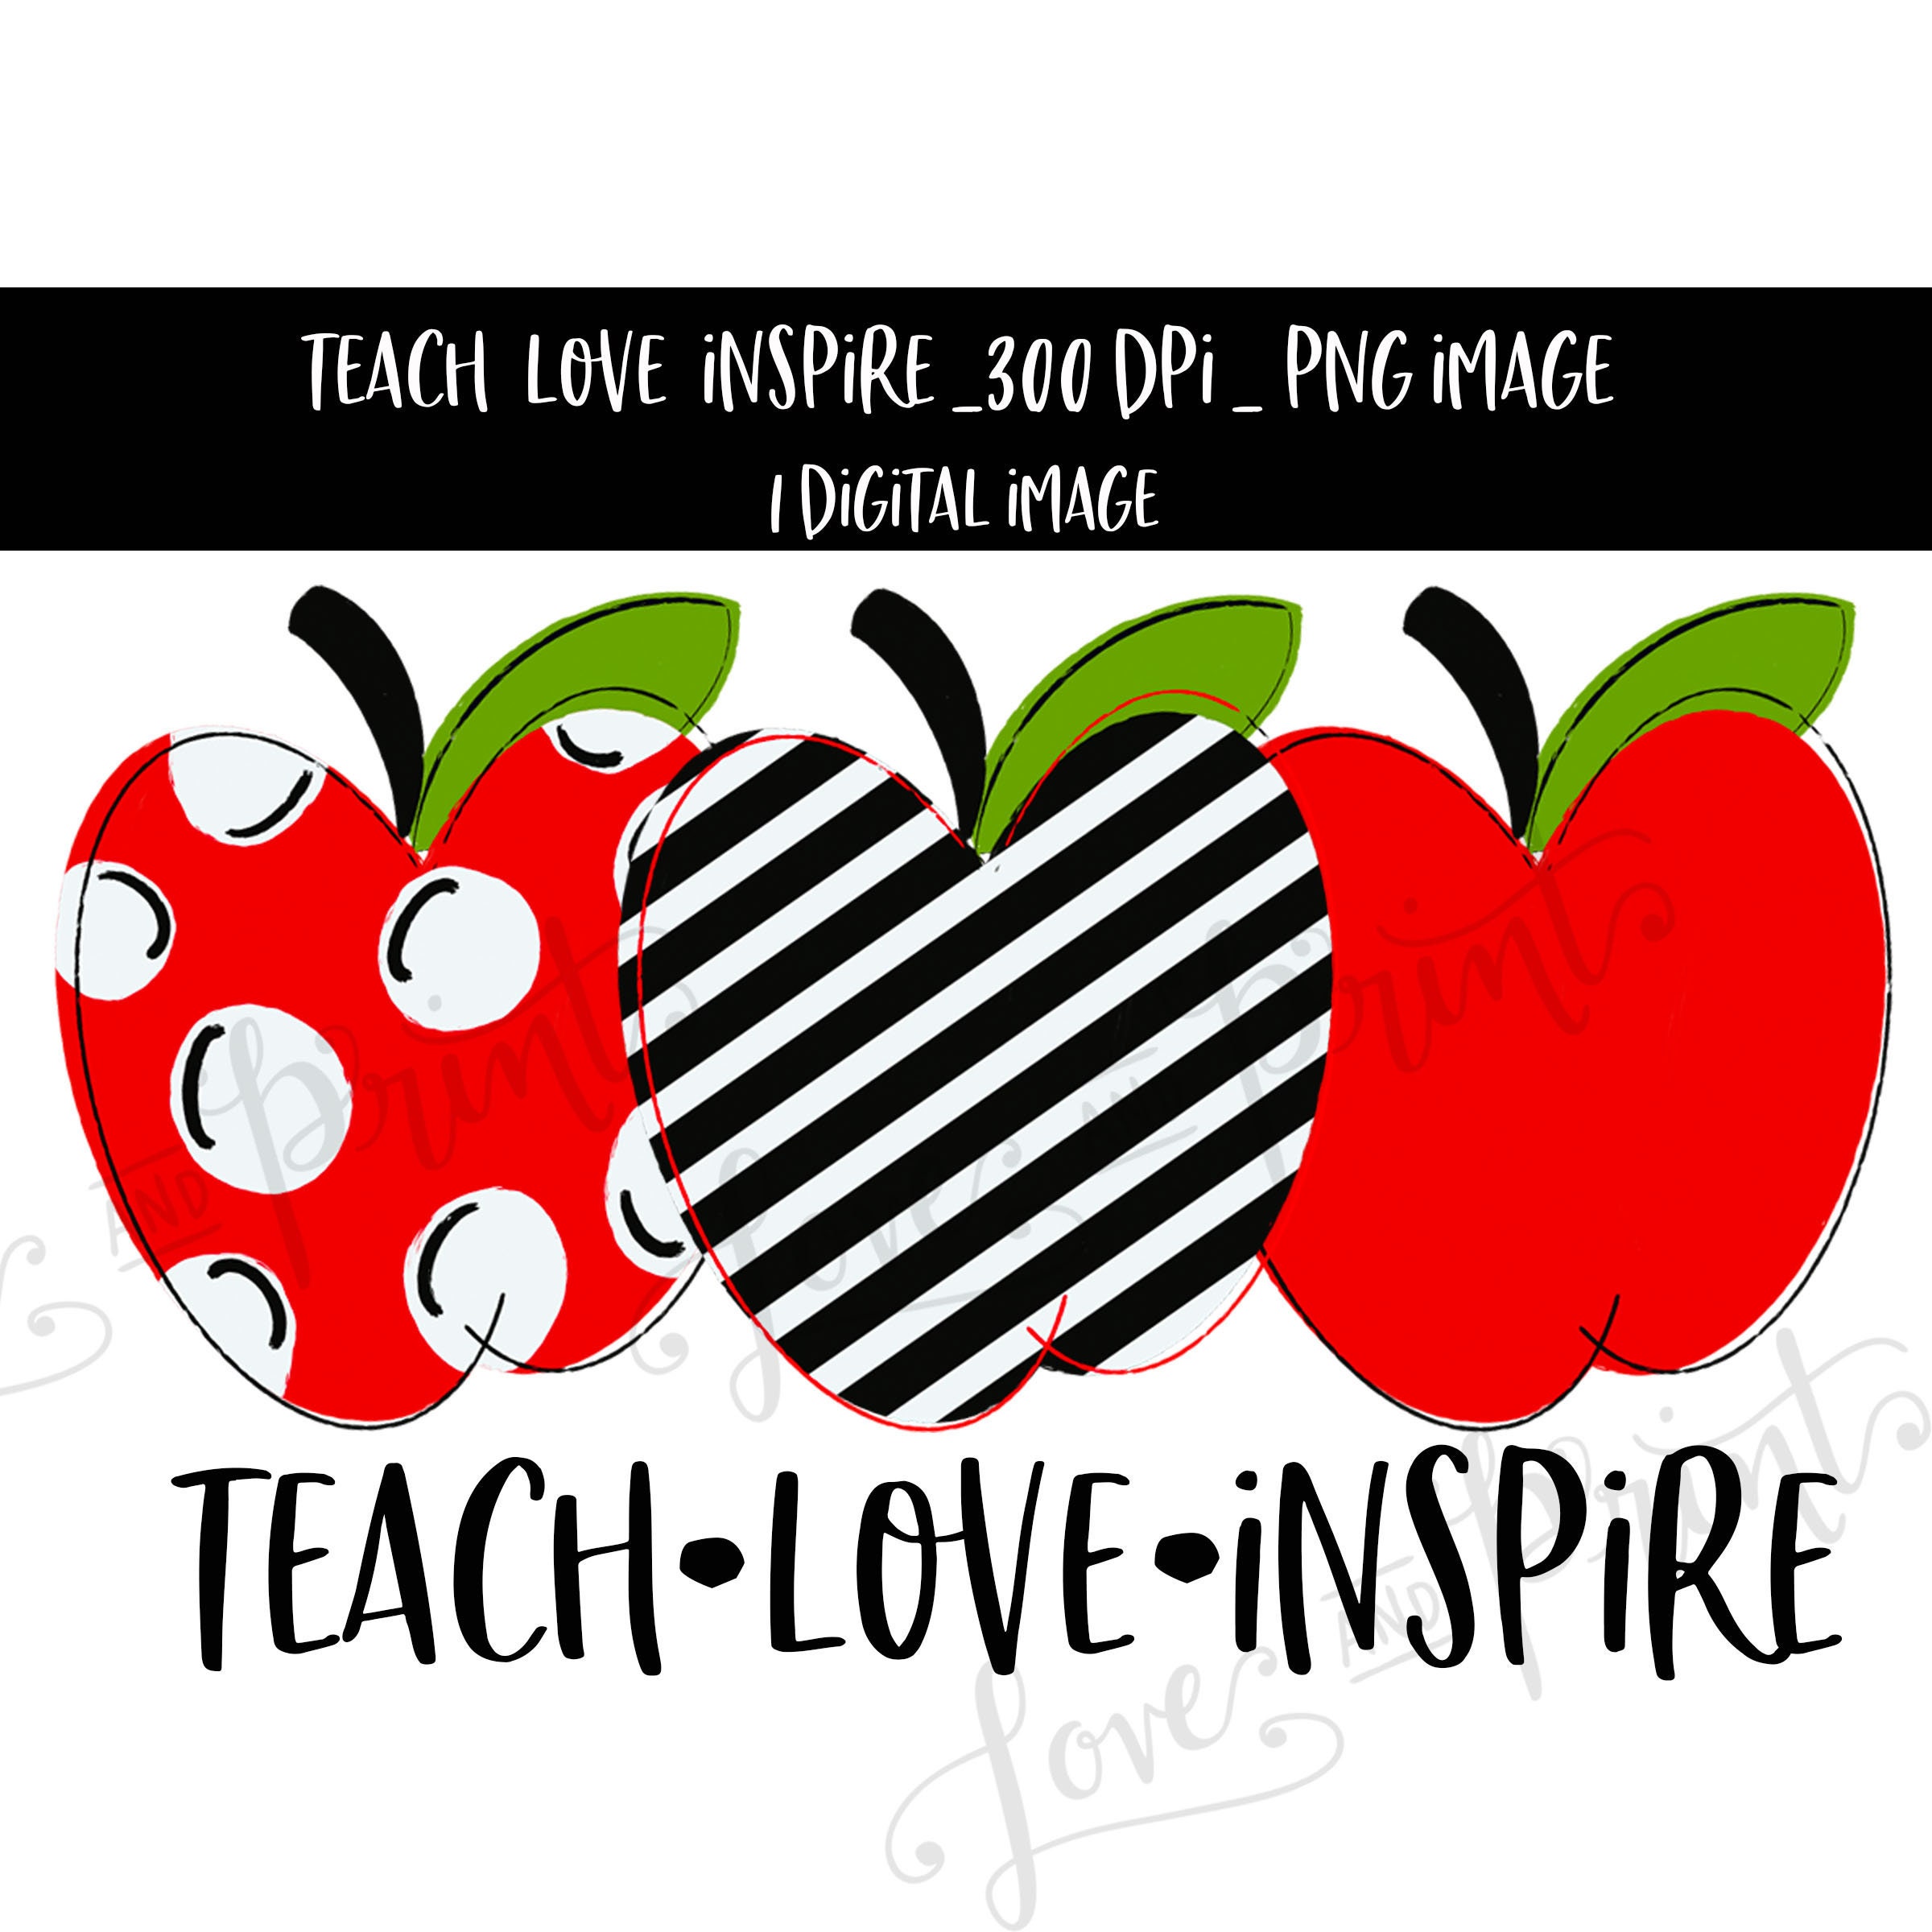 Teach Love inspire. Teaching Love. Картинки на сублимацию про любовь. Apple i Love you. Лов граде